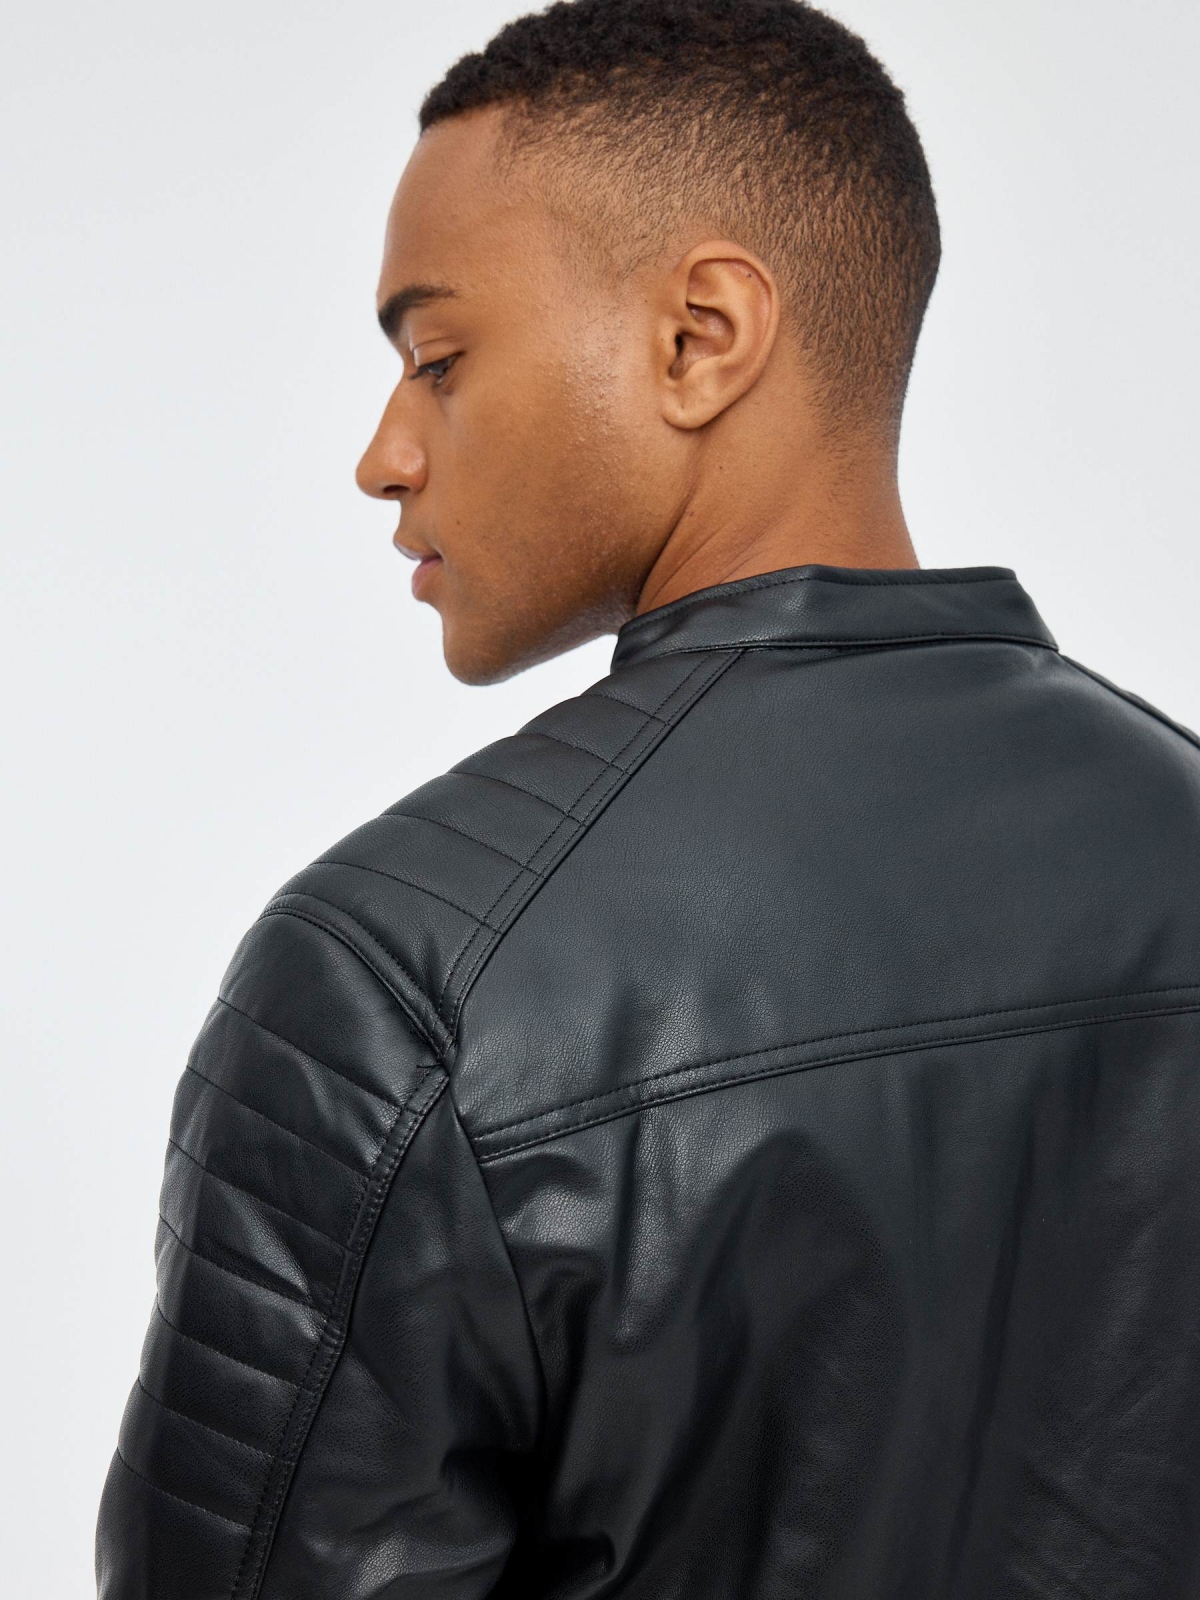 Black leather effect jacket black detail view